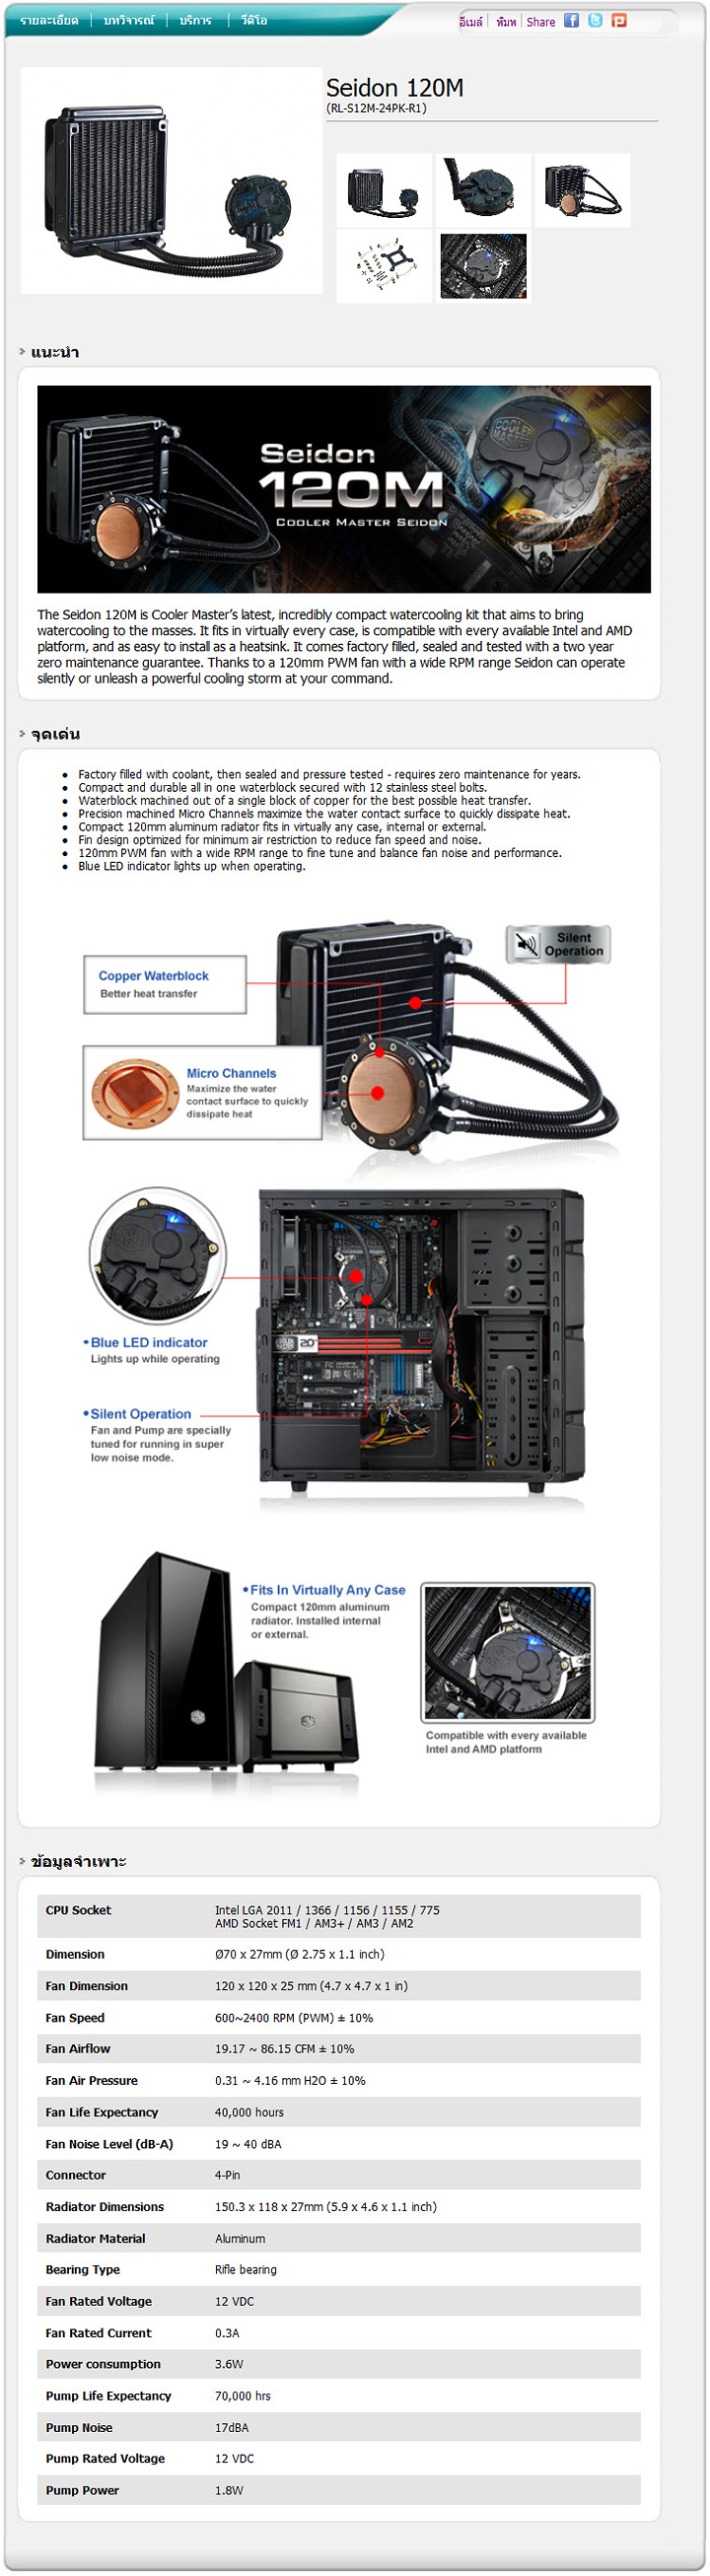 11 15 2012 9 26 29 pm1 Cooler Master Seidon 120M Liquid CPU Cooler Review